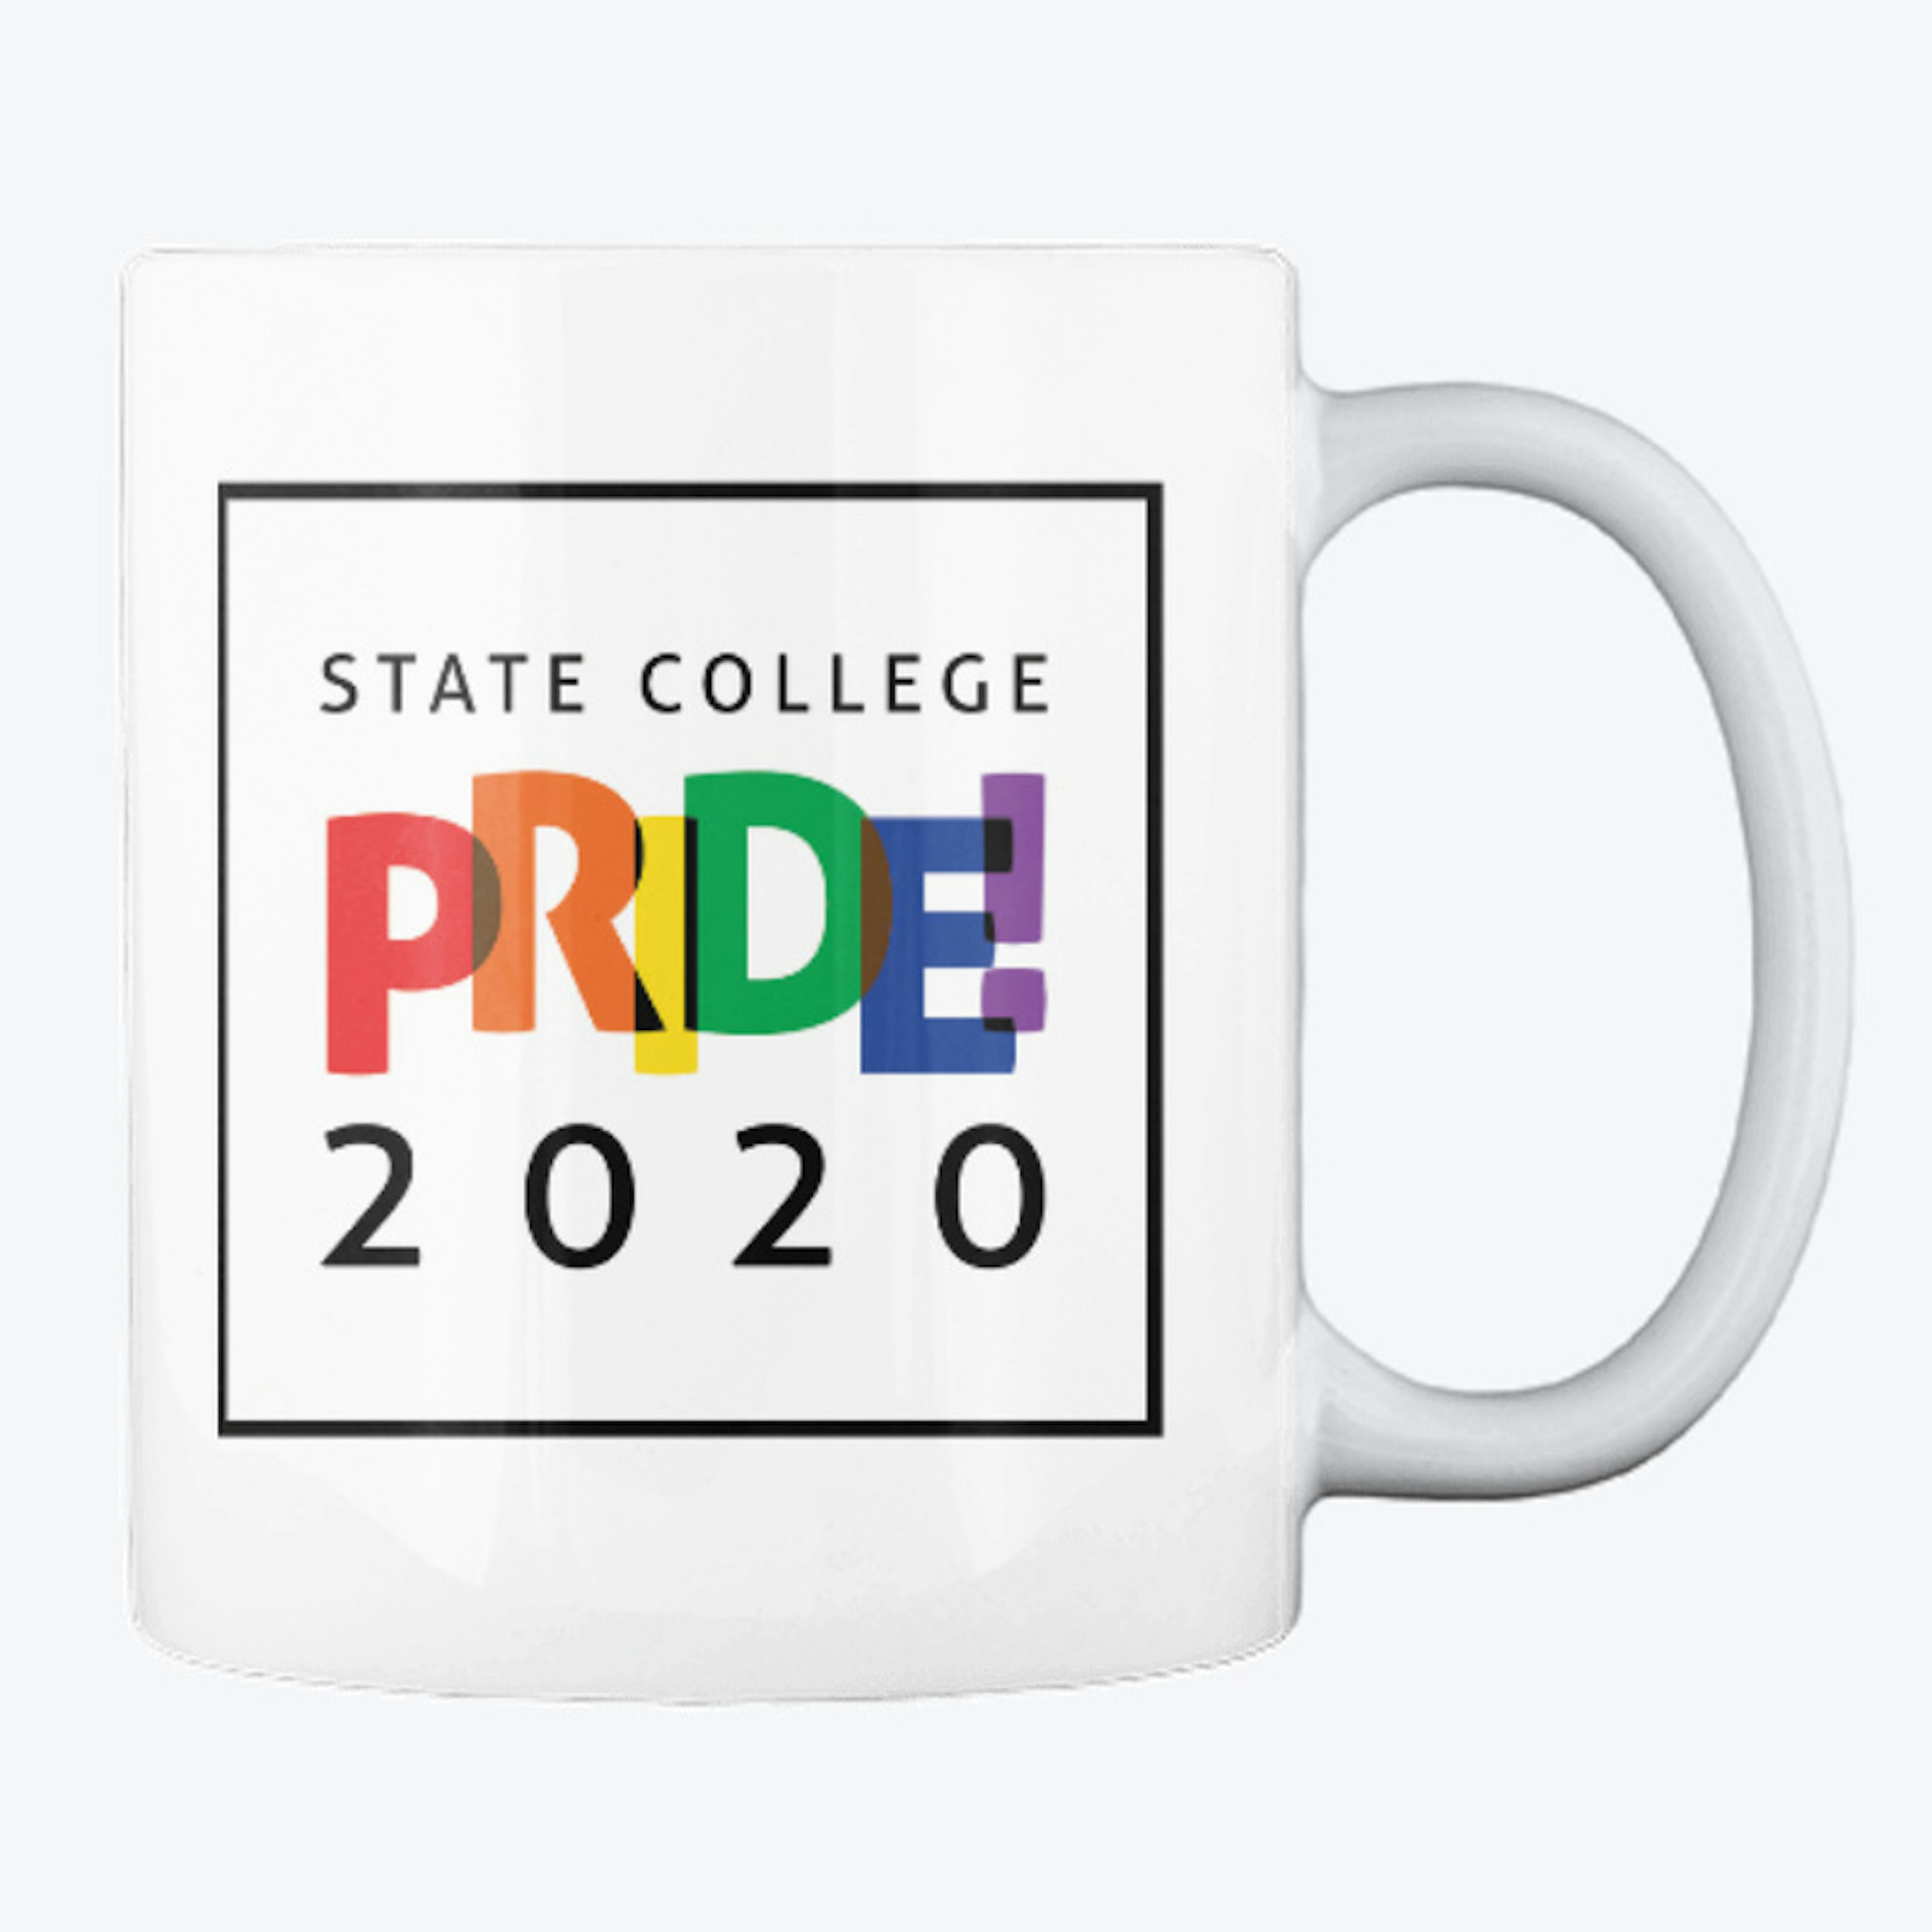 Pride 2020 logo mug